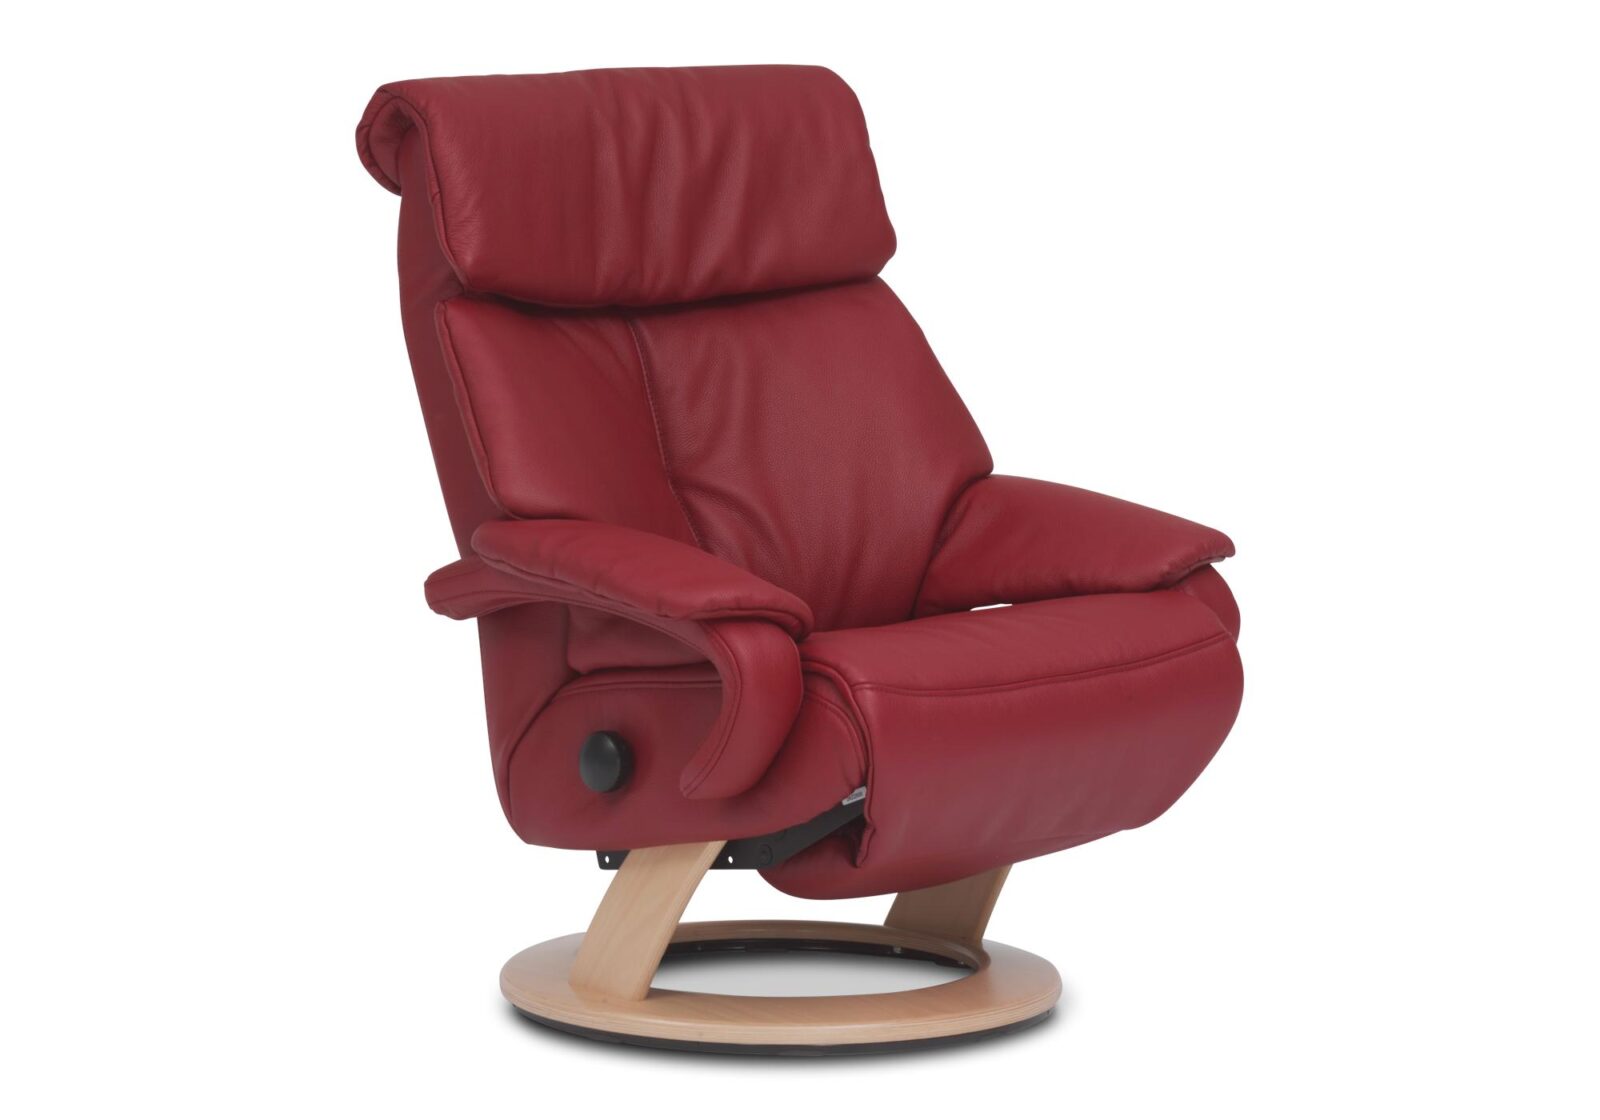 Relaxsessel Cosy  manuell verstellbar. Bezug: Leder. Farbe: Rot. Erhältlich bei Möbel Gallati.